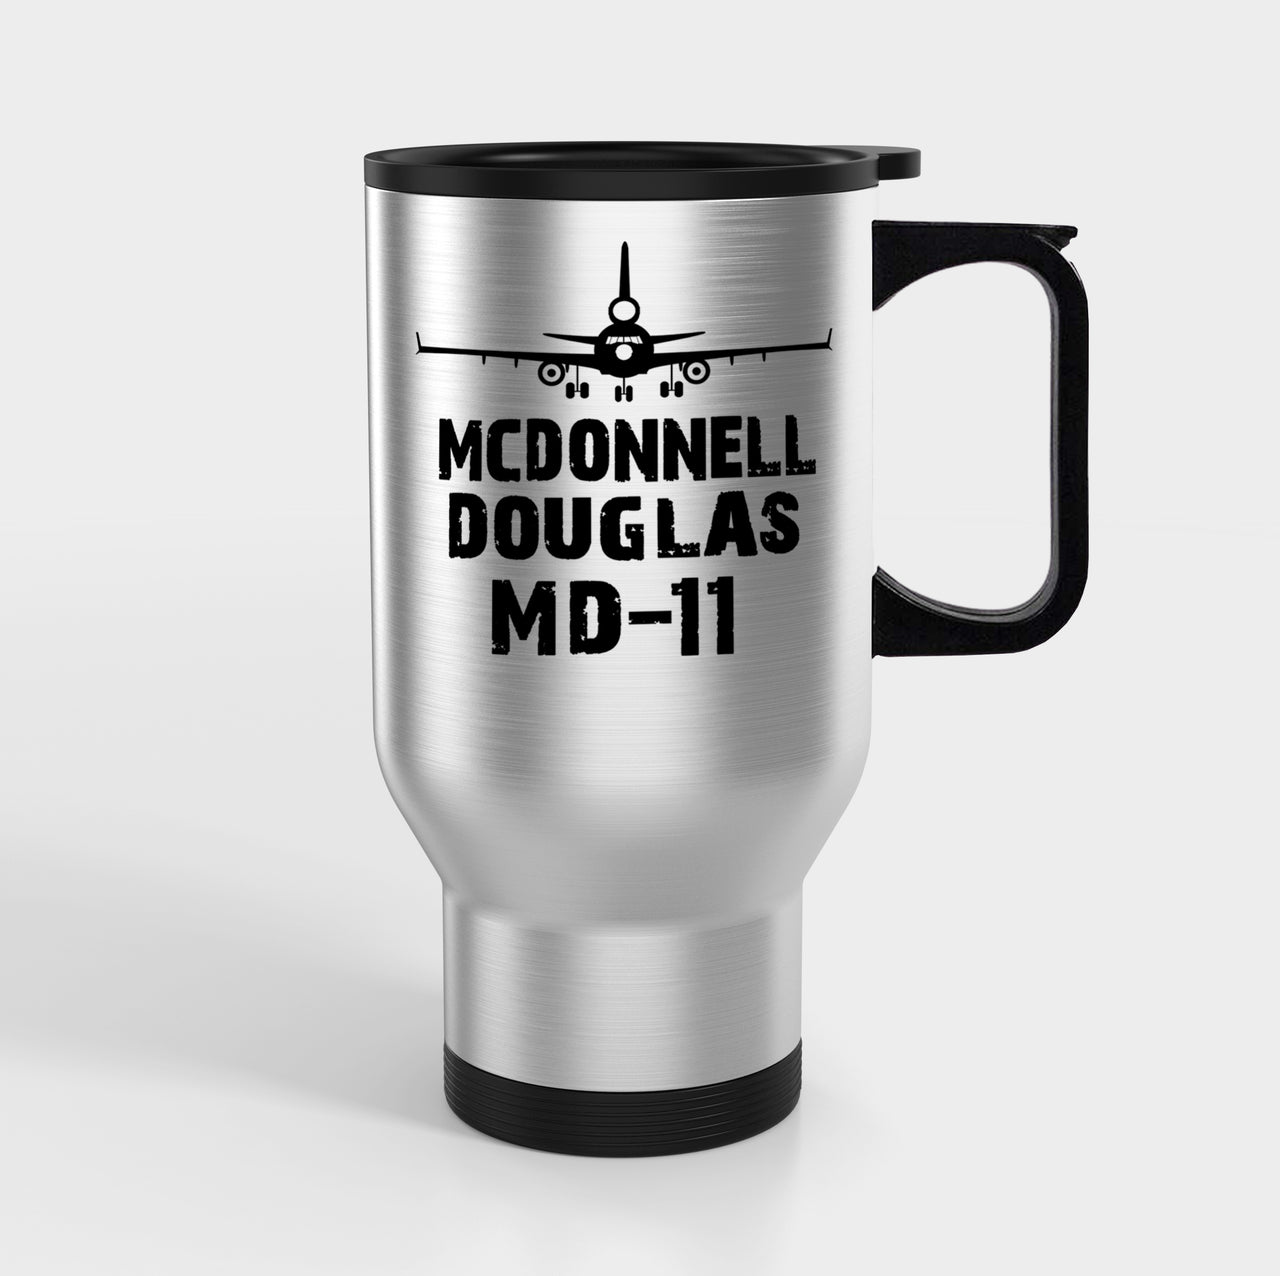 McDonnell Douglas MD-11 & Plane Designed Travel Mugs (With Holder)